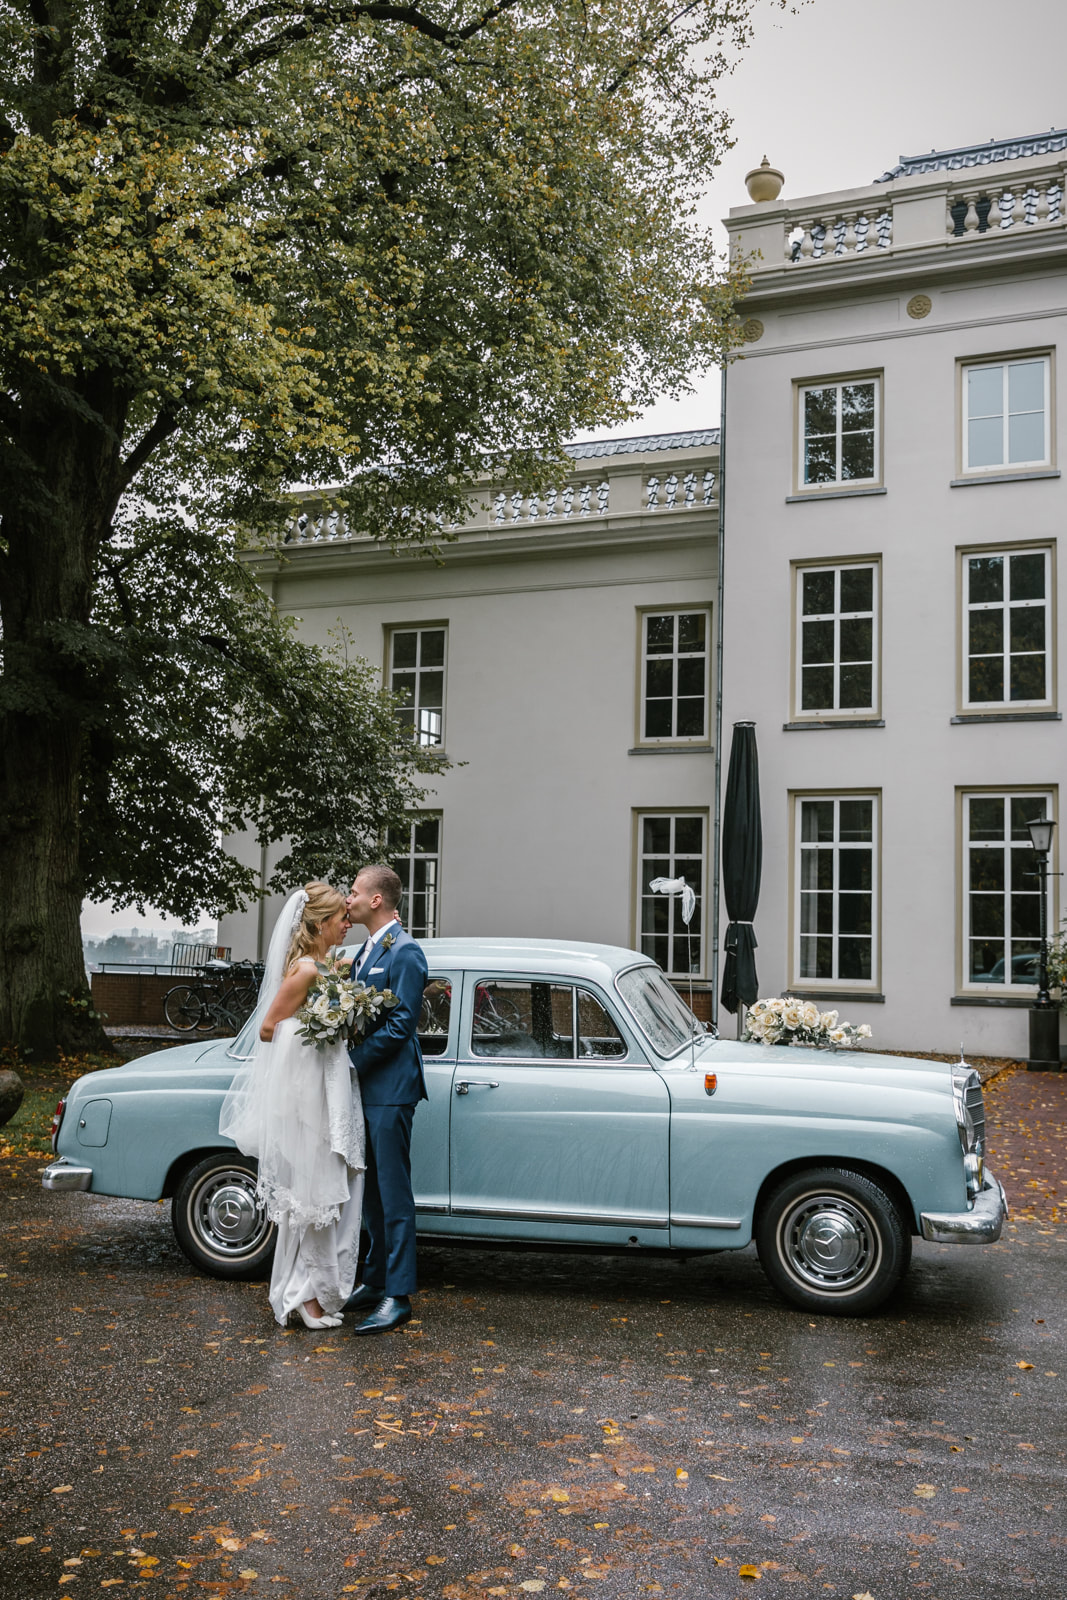 Weddingphotos,Wedding,Huwelijk,Trouwen,Trouwreportage,Trouwfotografie,Trouwen,Trouwen in Arnhem,Villa Sonsbeek,MyEyeFotografie